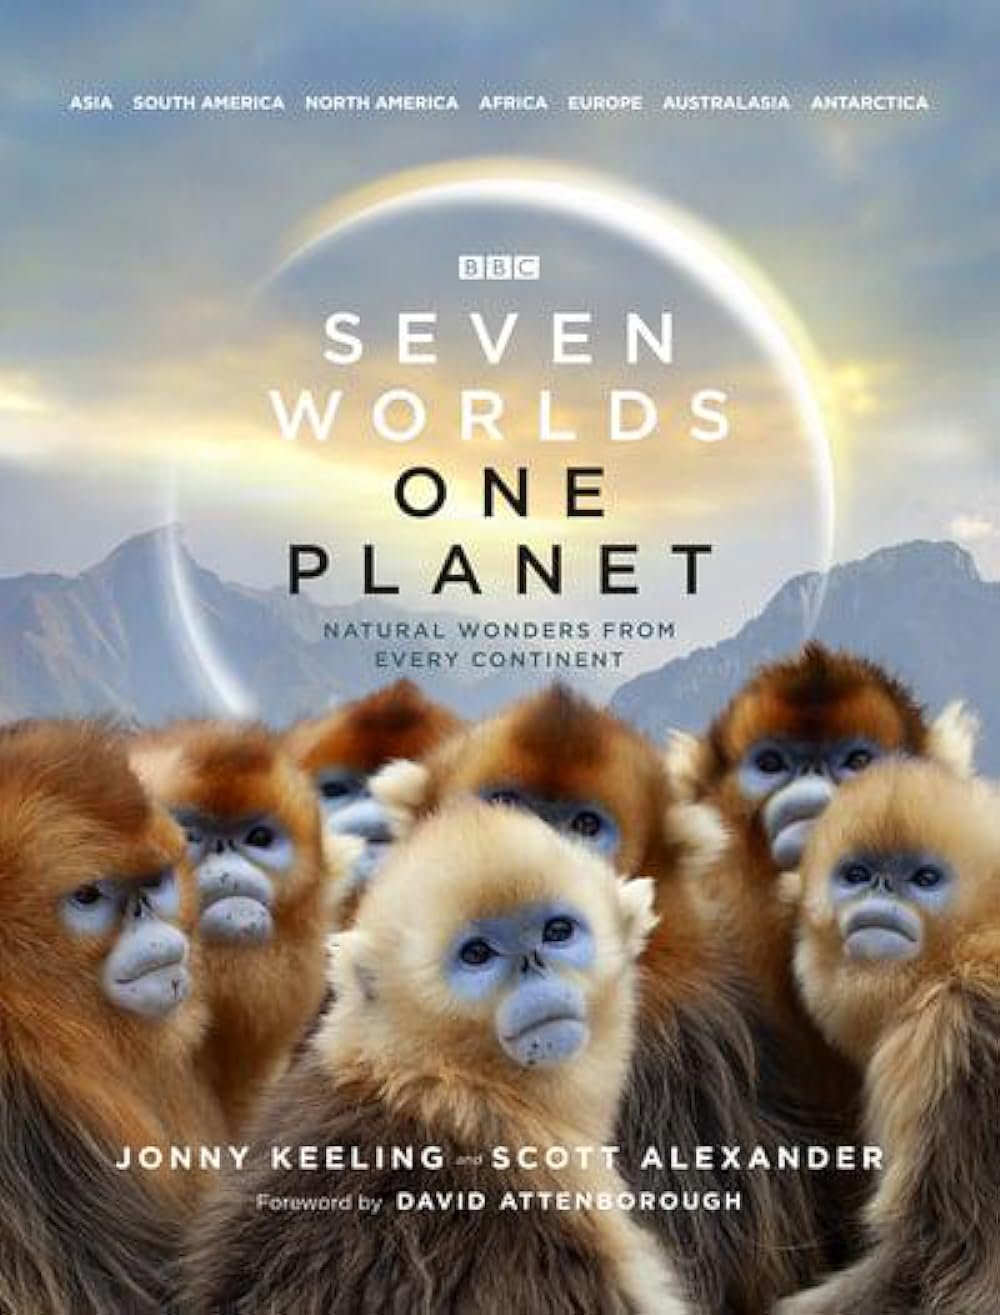 Seven Worlds One Planet (2019) - Score Mixer